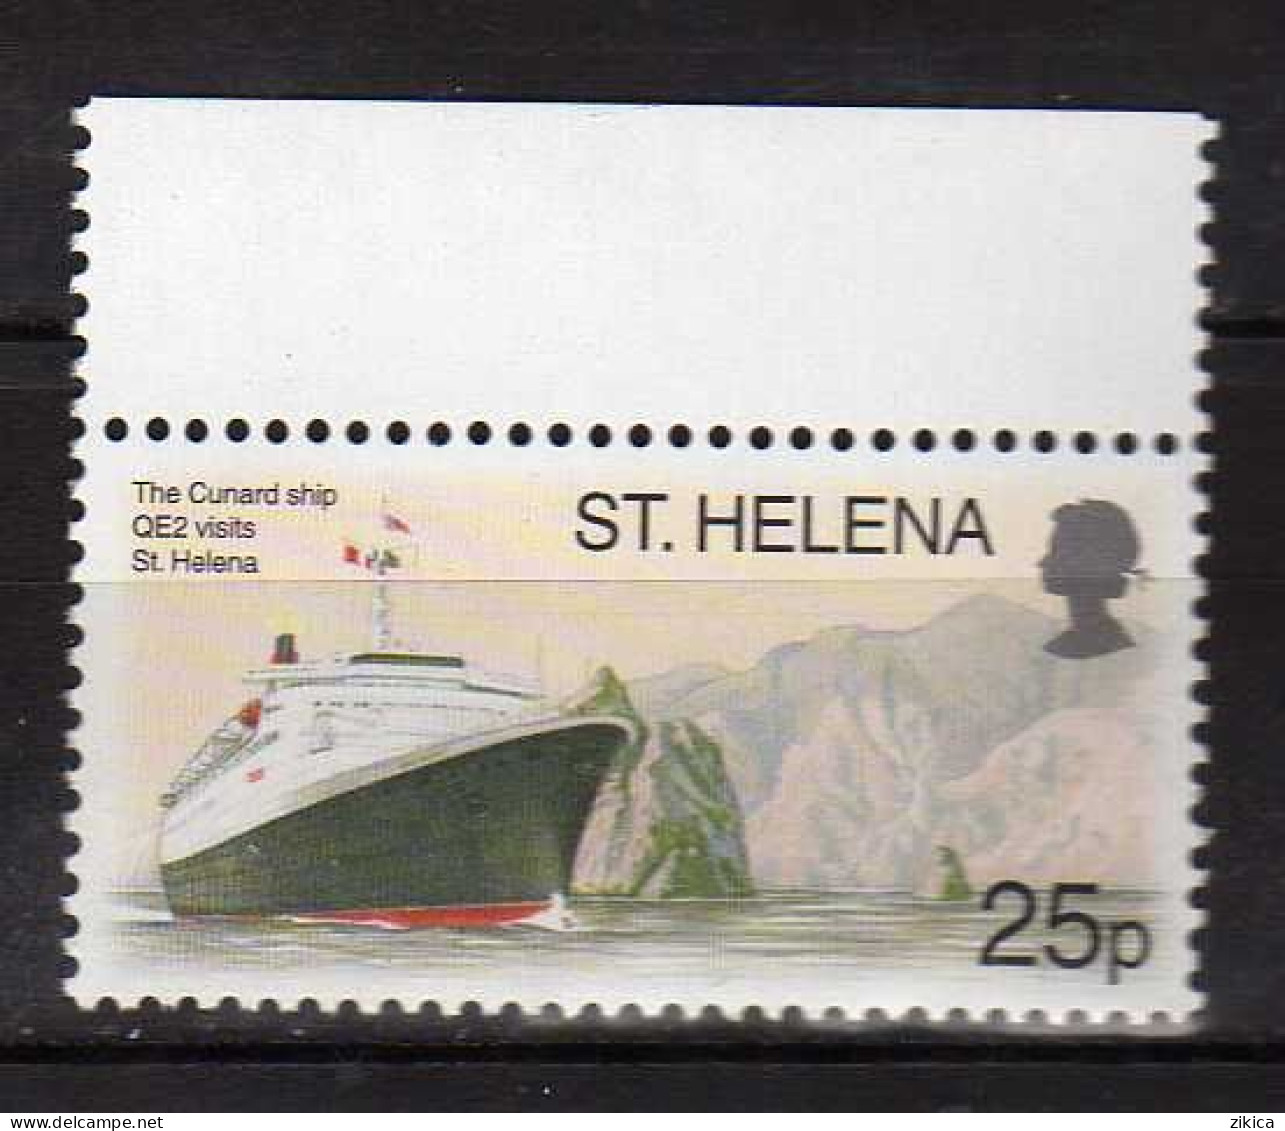 Saint Helena Island 2003 Tourism.Passenger Ship "Queen Elizabeth II".MNH. MNH** - Saint Helena Island